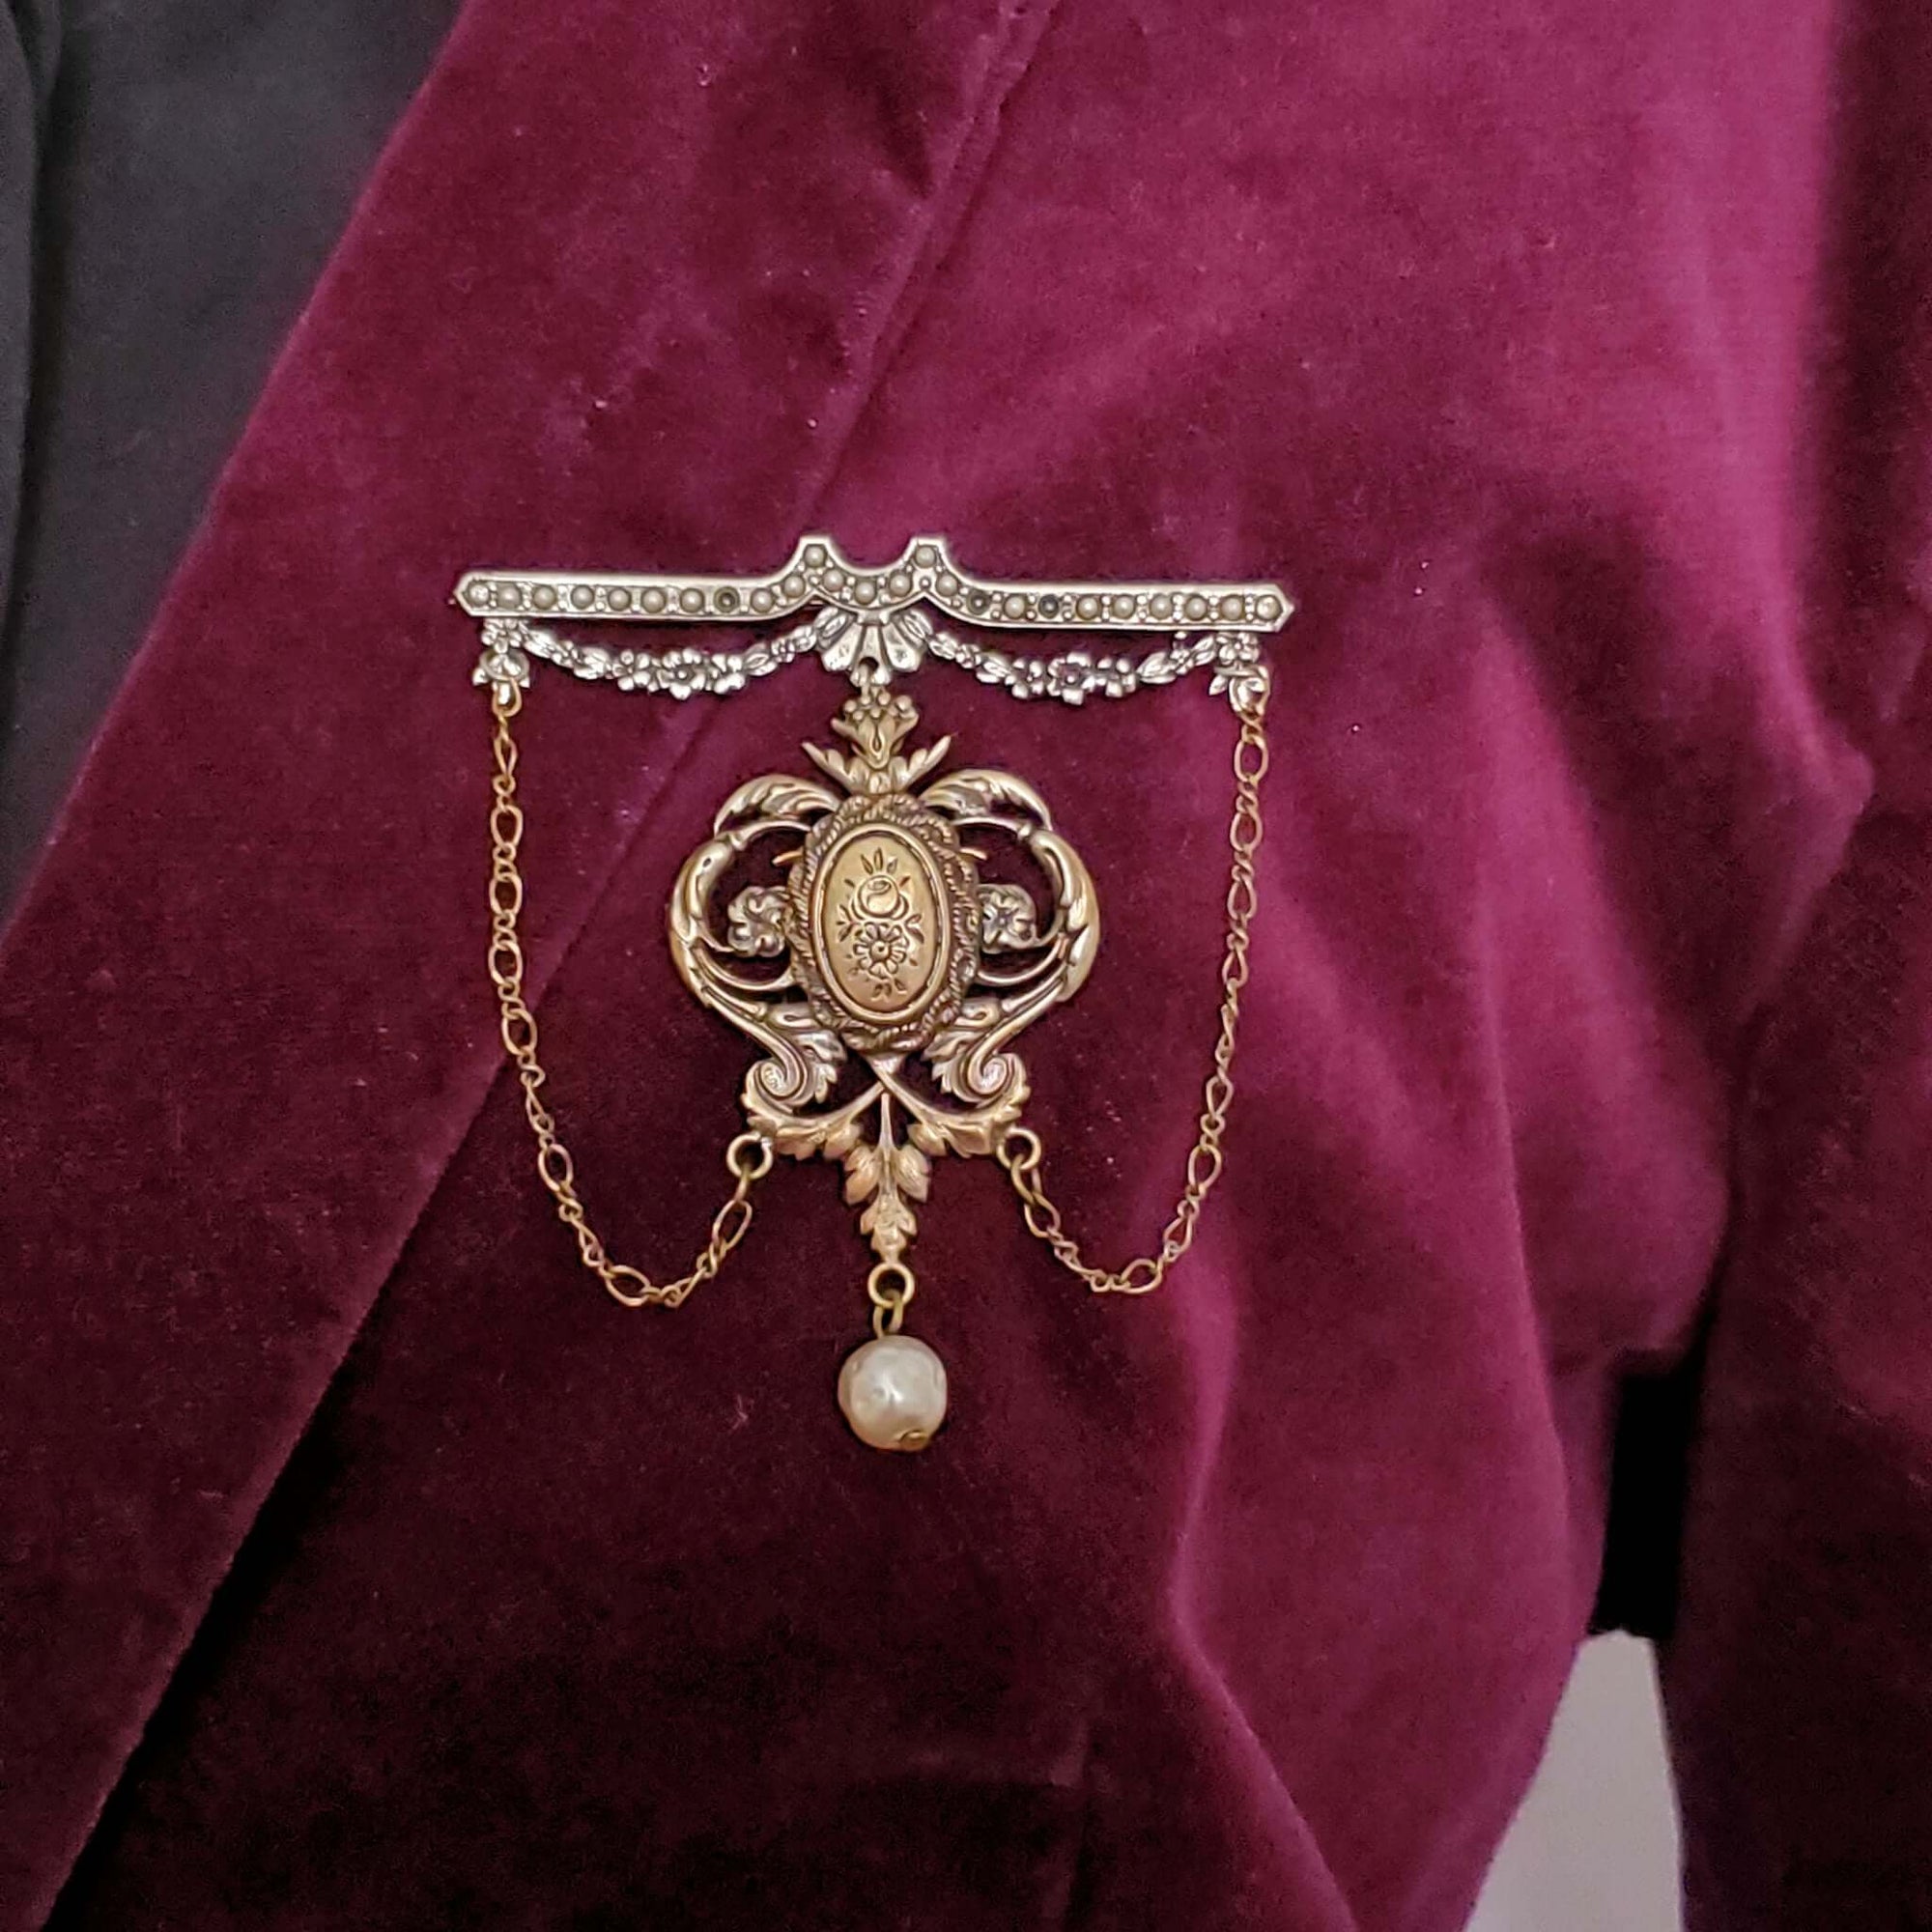 Victorian style blazer brooch